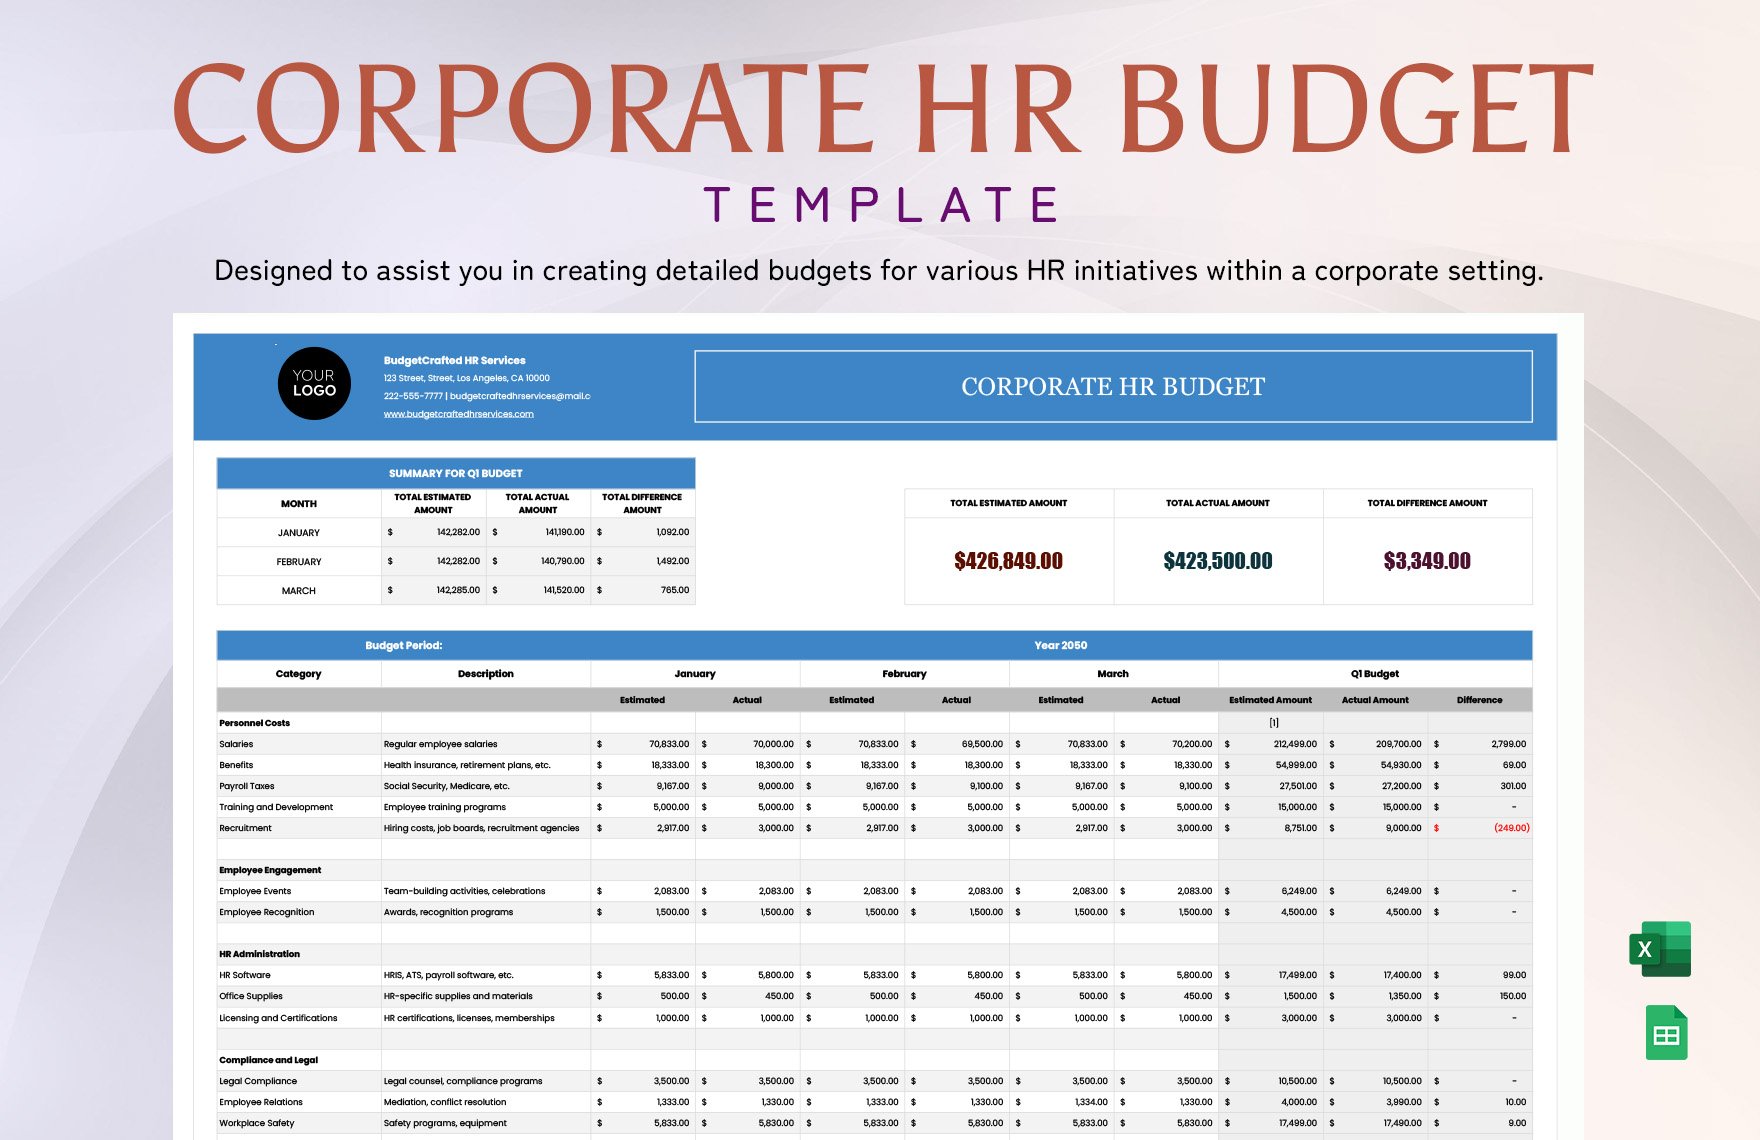 Corporate HR Budget Template